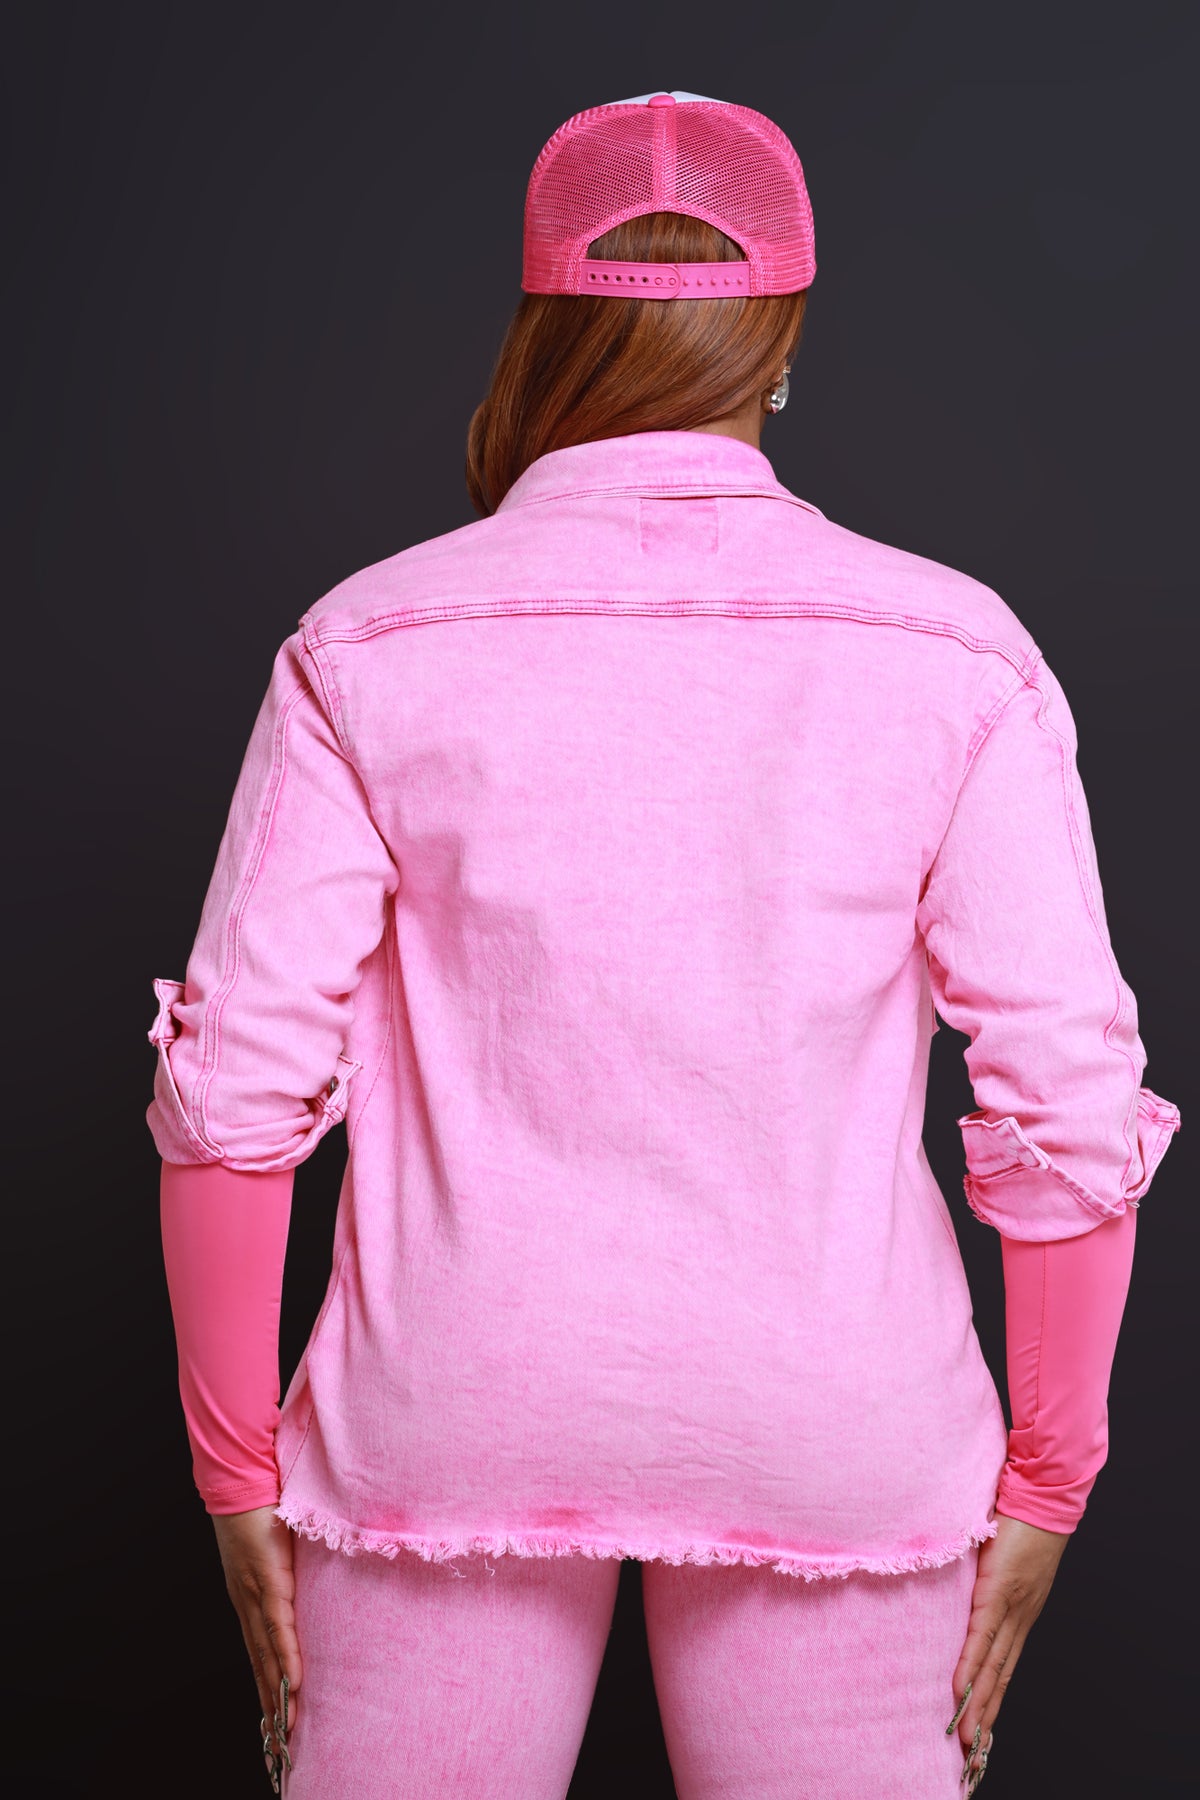 
              Access Denied Denim Jacket - Pink - Swank A Posh
            